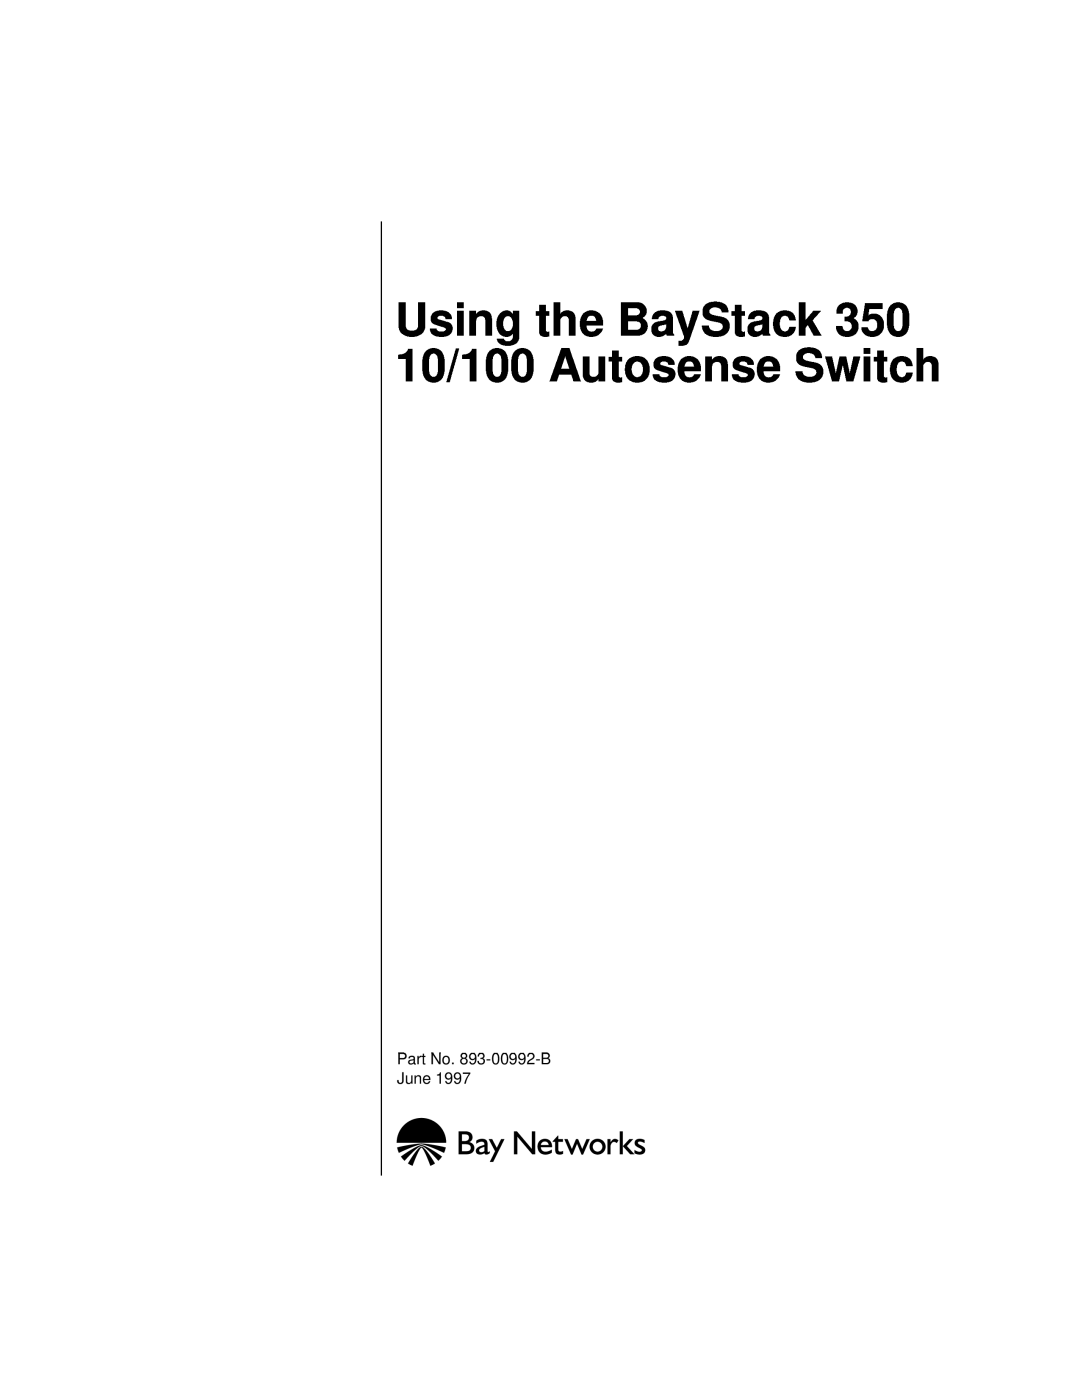 Bay Technical Associates manual Using the BayStack 350 10/100 Autosense Switch, Part No. 893-00992-B June 